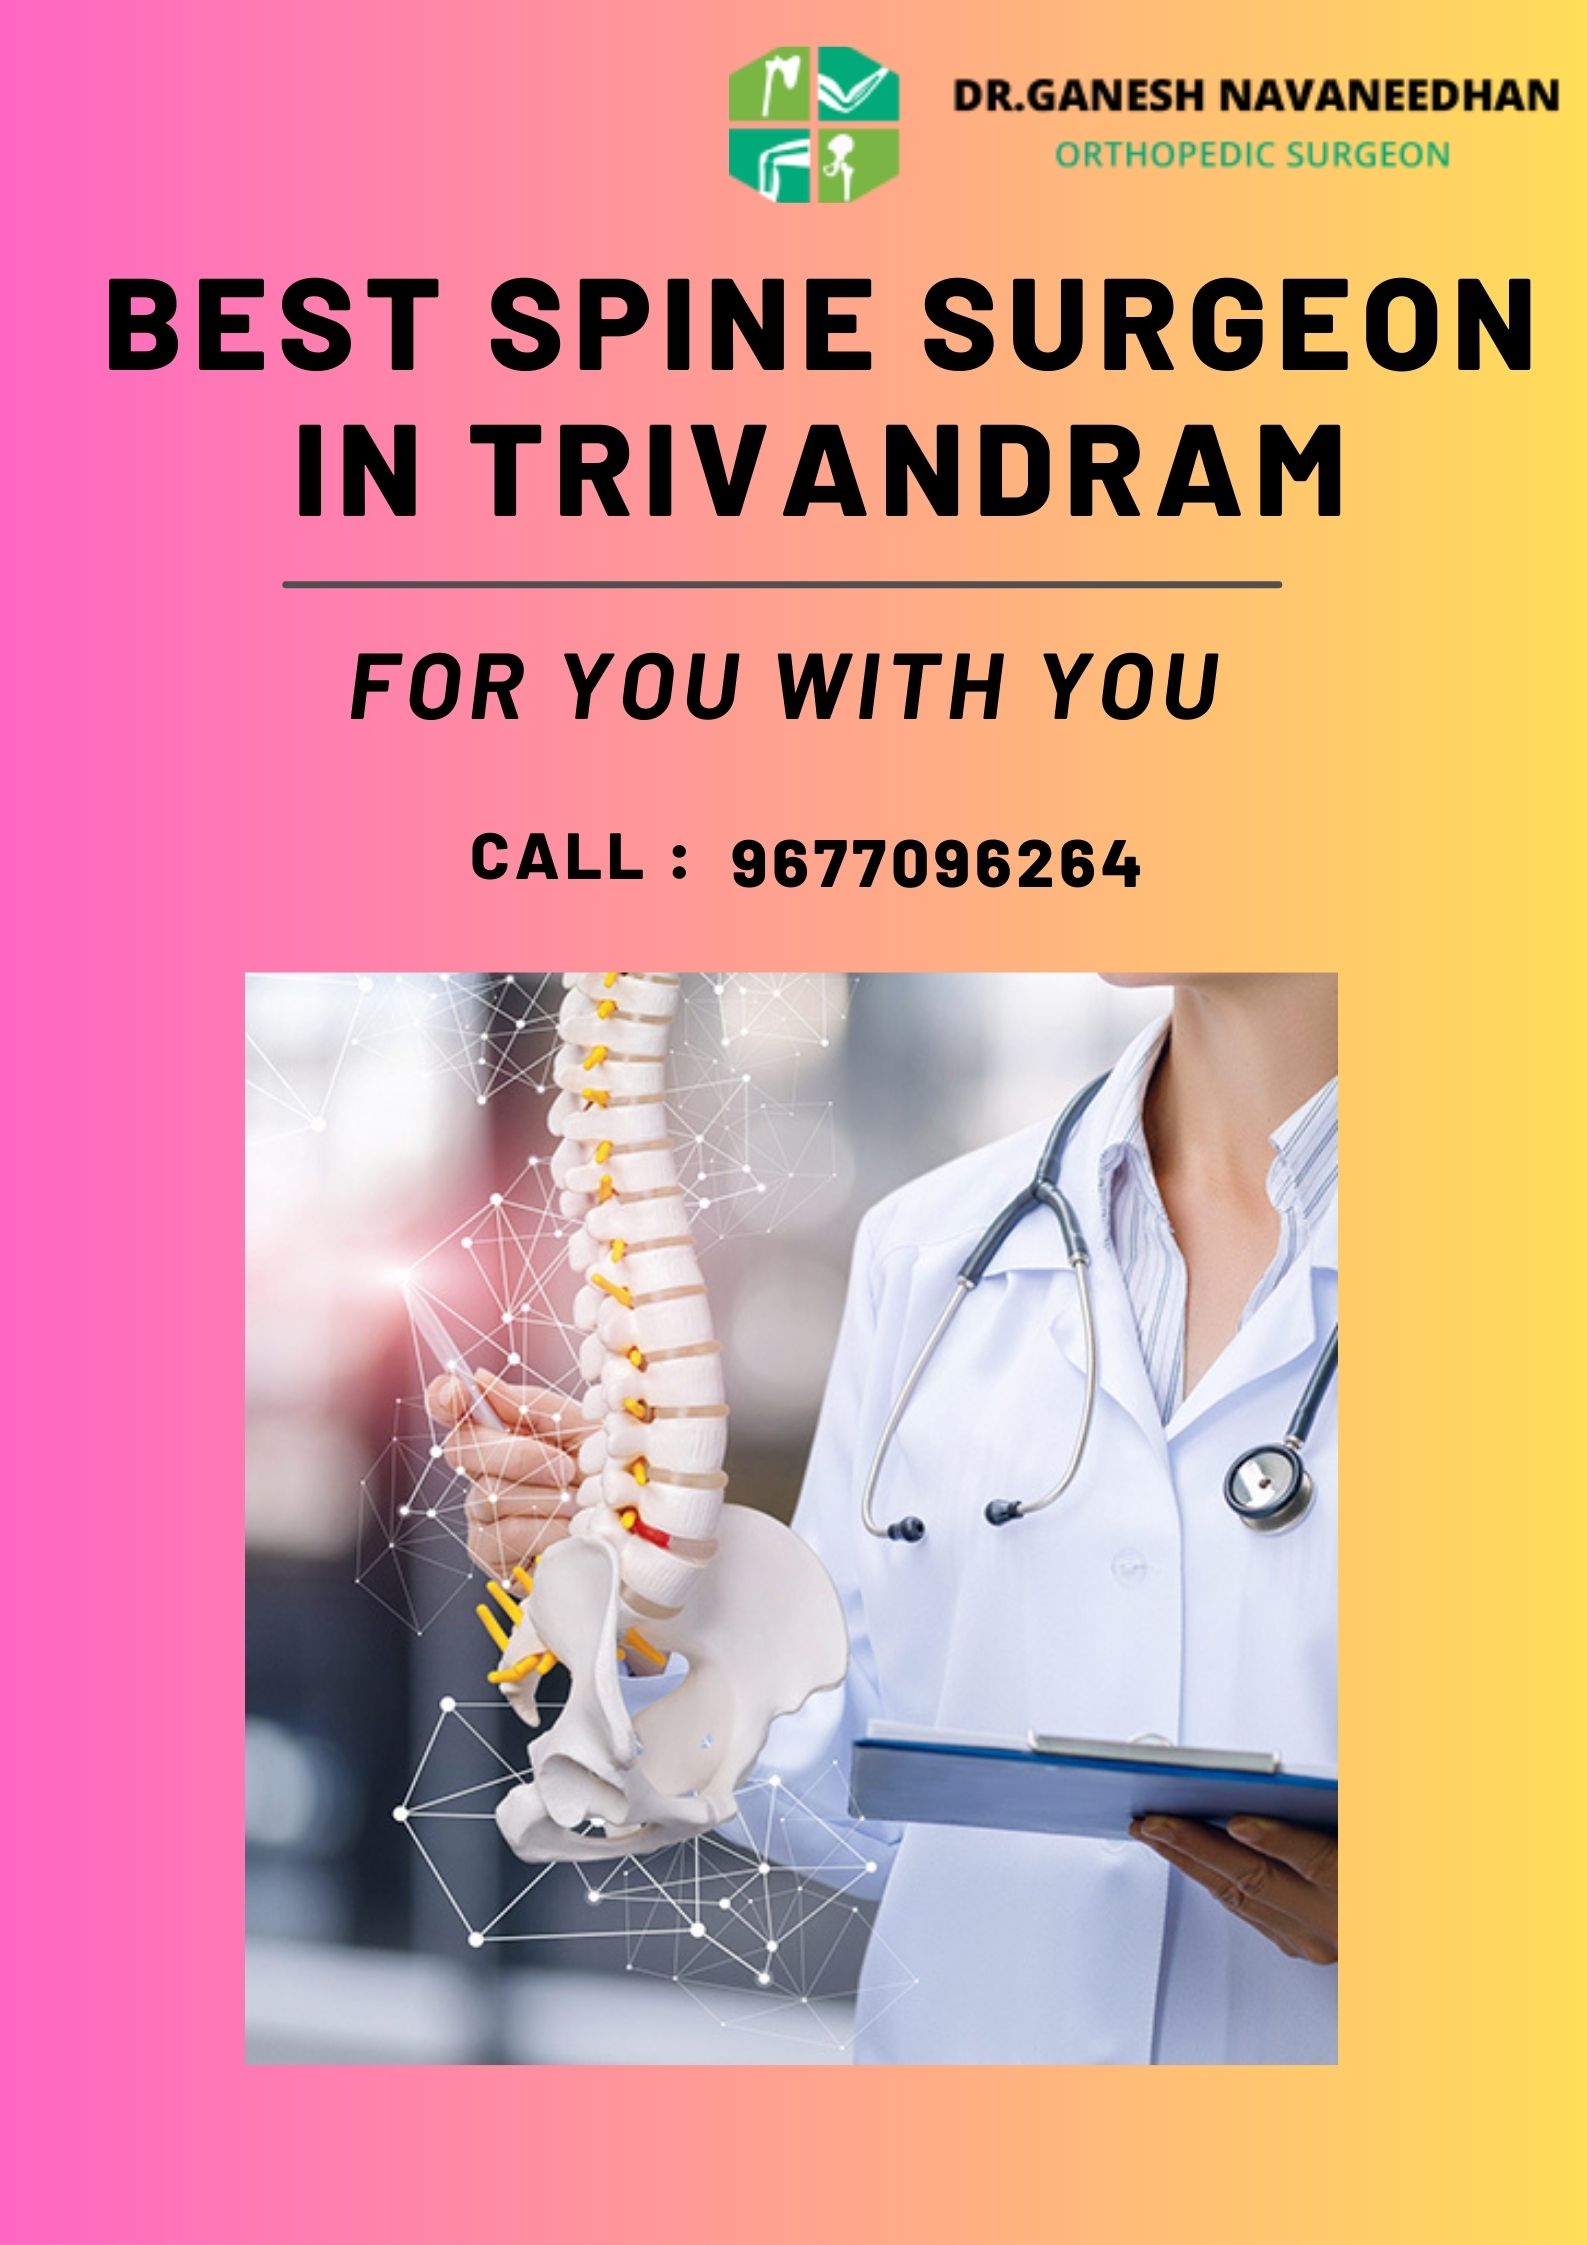 Best Spine Surgeon in Trivandrum - Dr.Ganesh NavaneethanHealth and BeautyHospitalsAll Indiaother